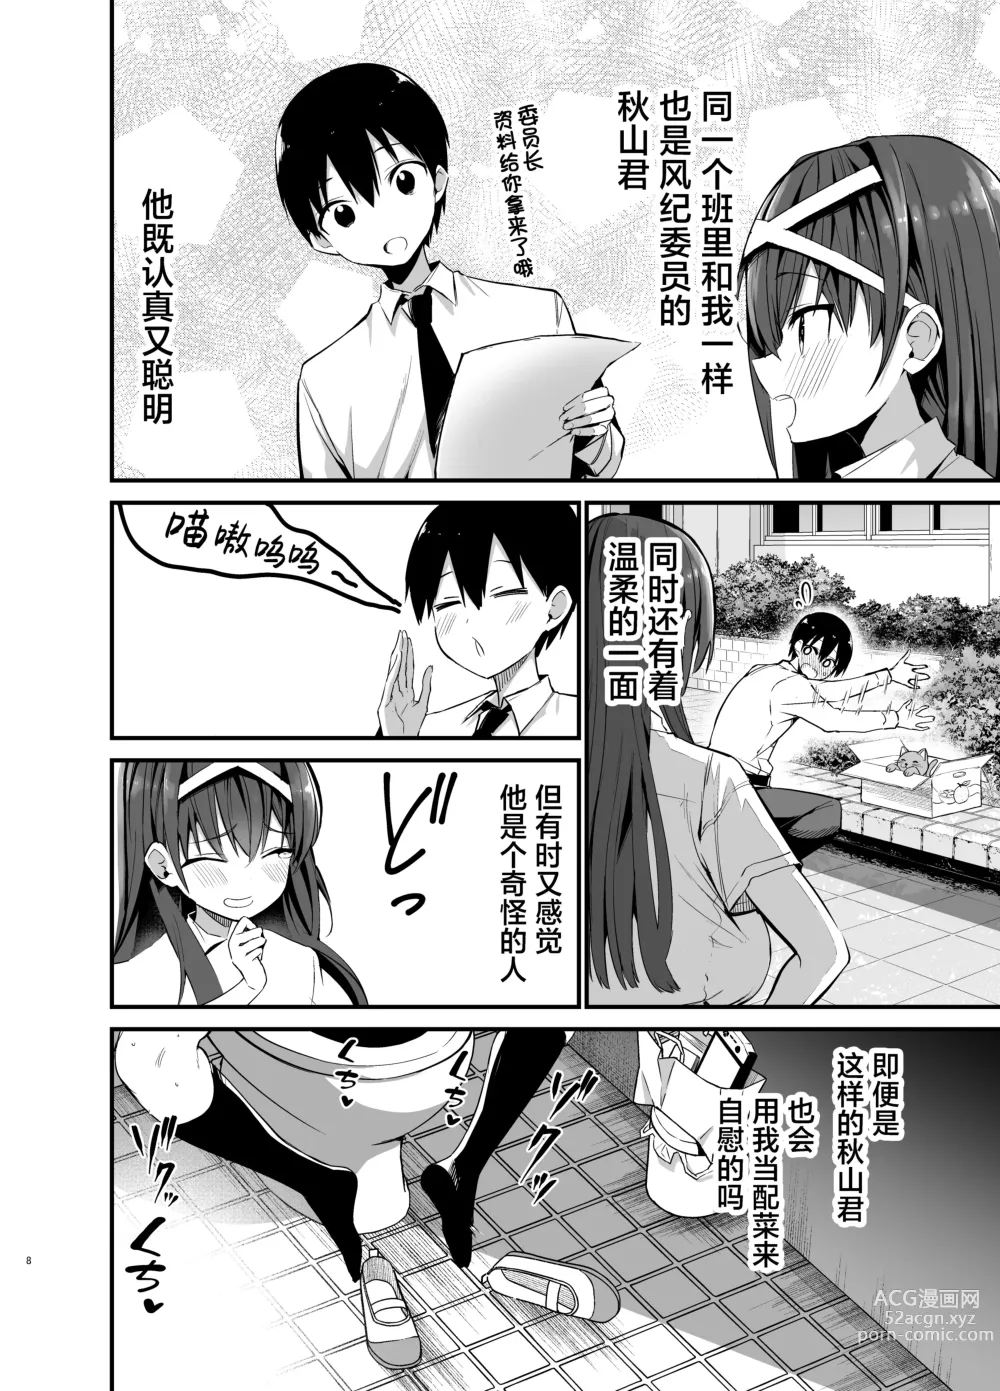 Page 7 of doujinshi Fuuki Iinchou ga Ochiru made